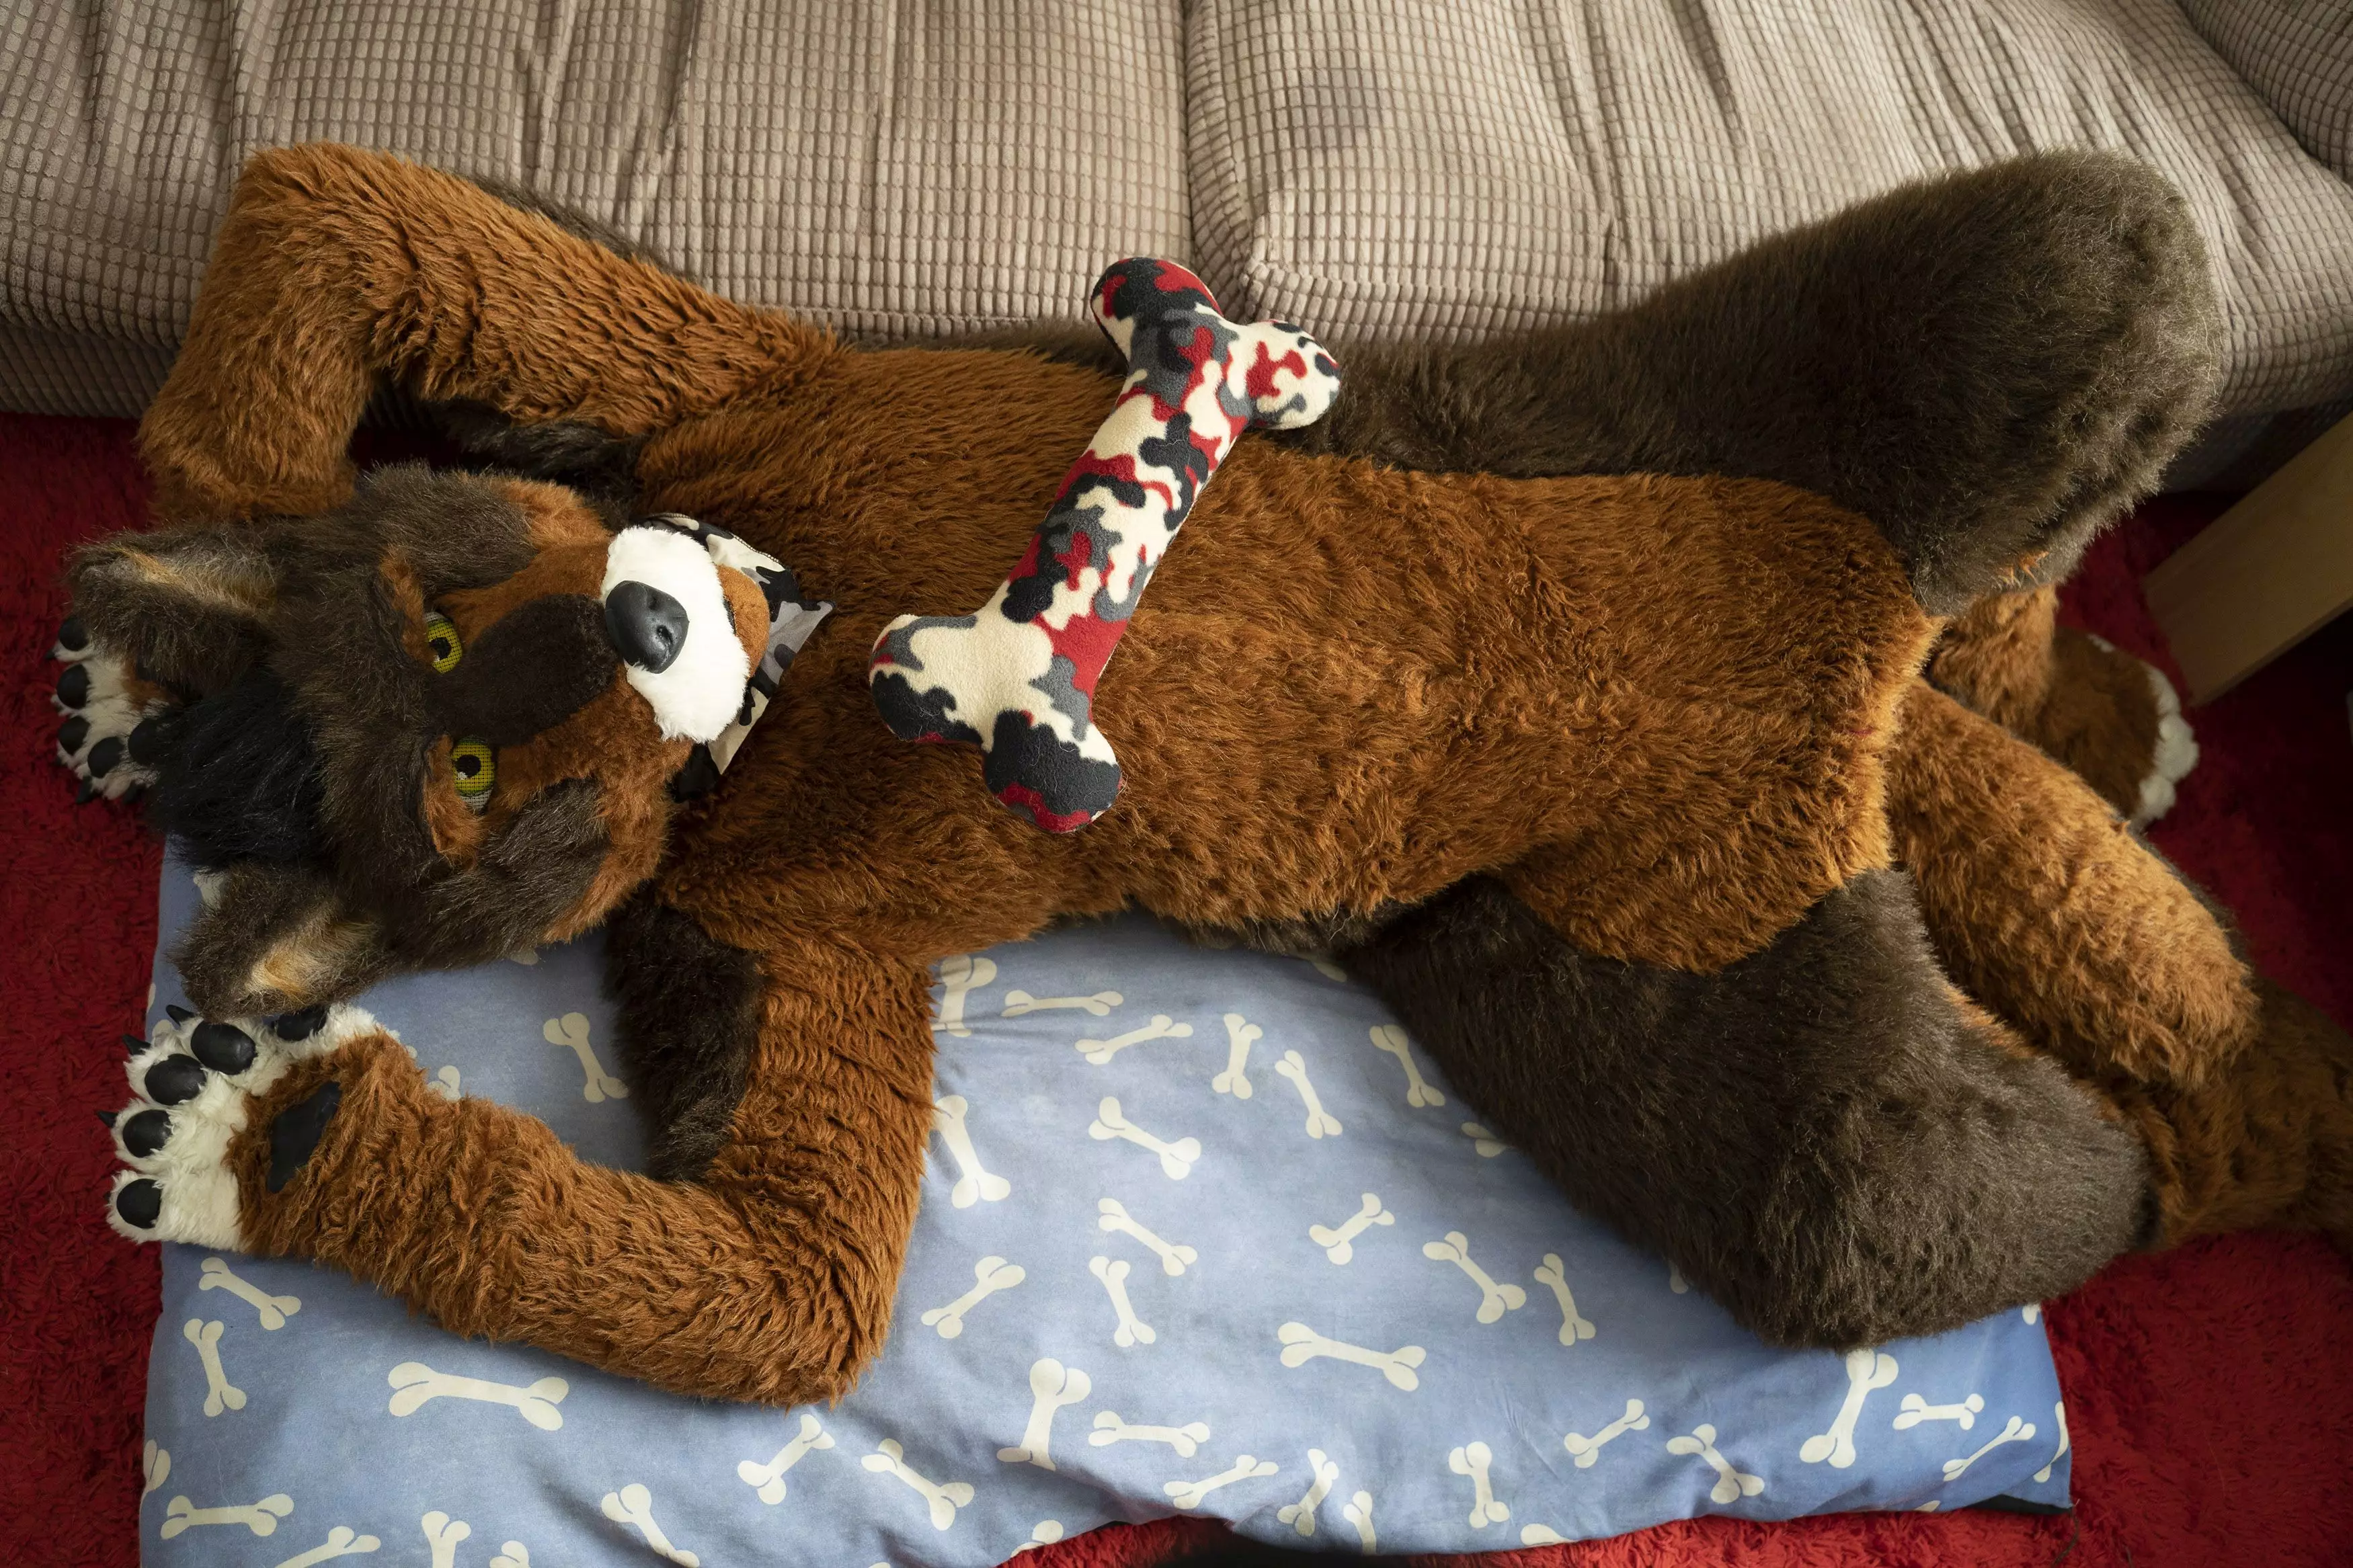 Kaz relaxing in his custom-made fur suit.